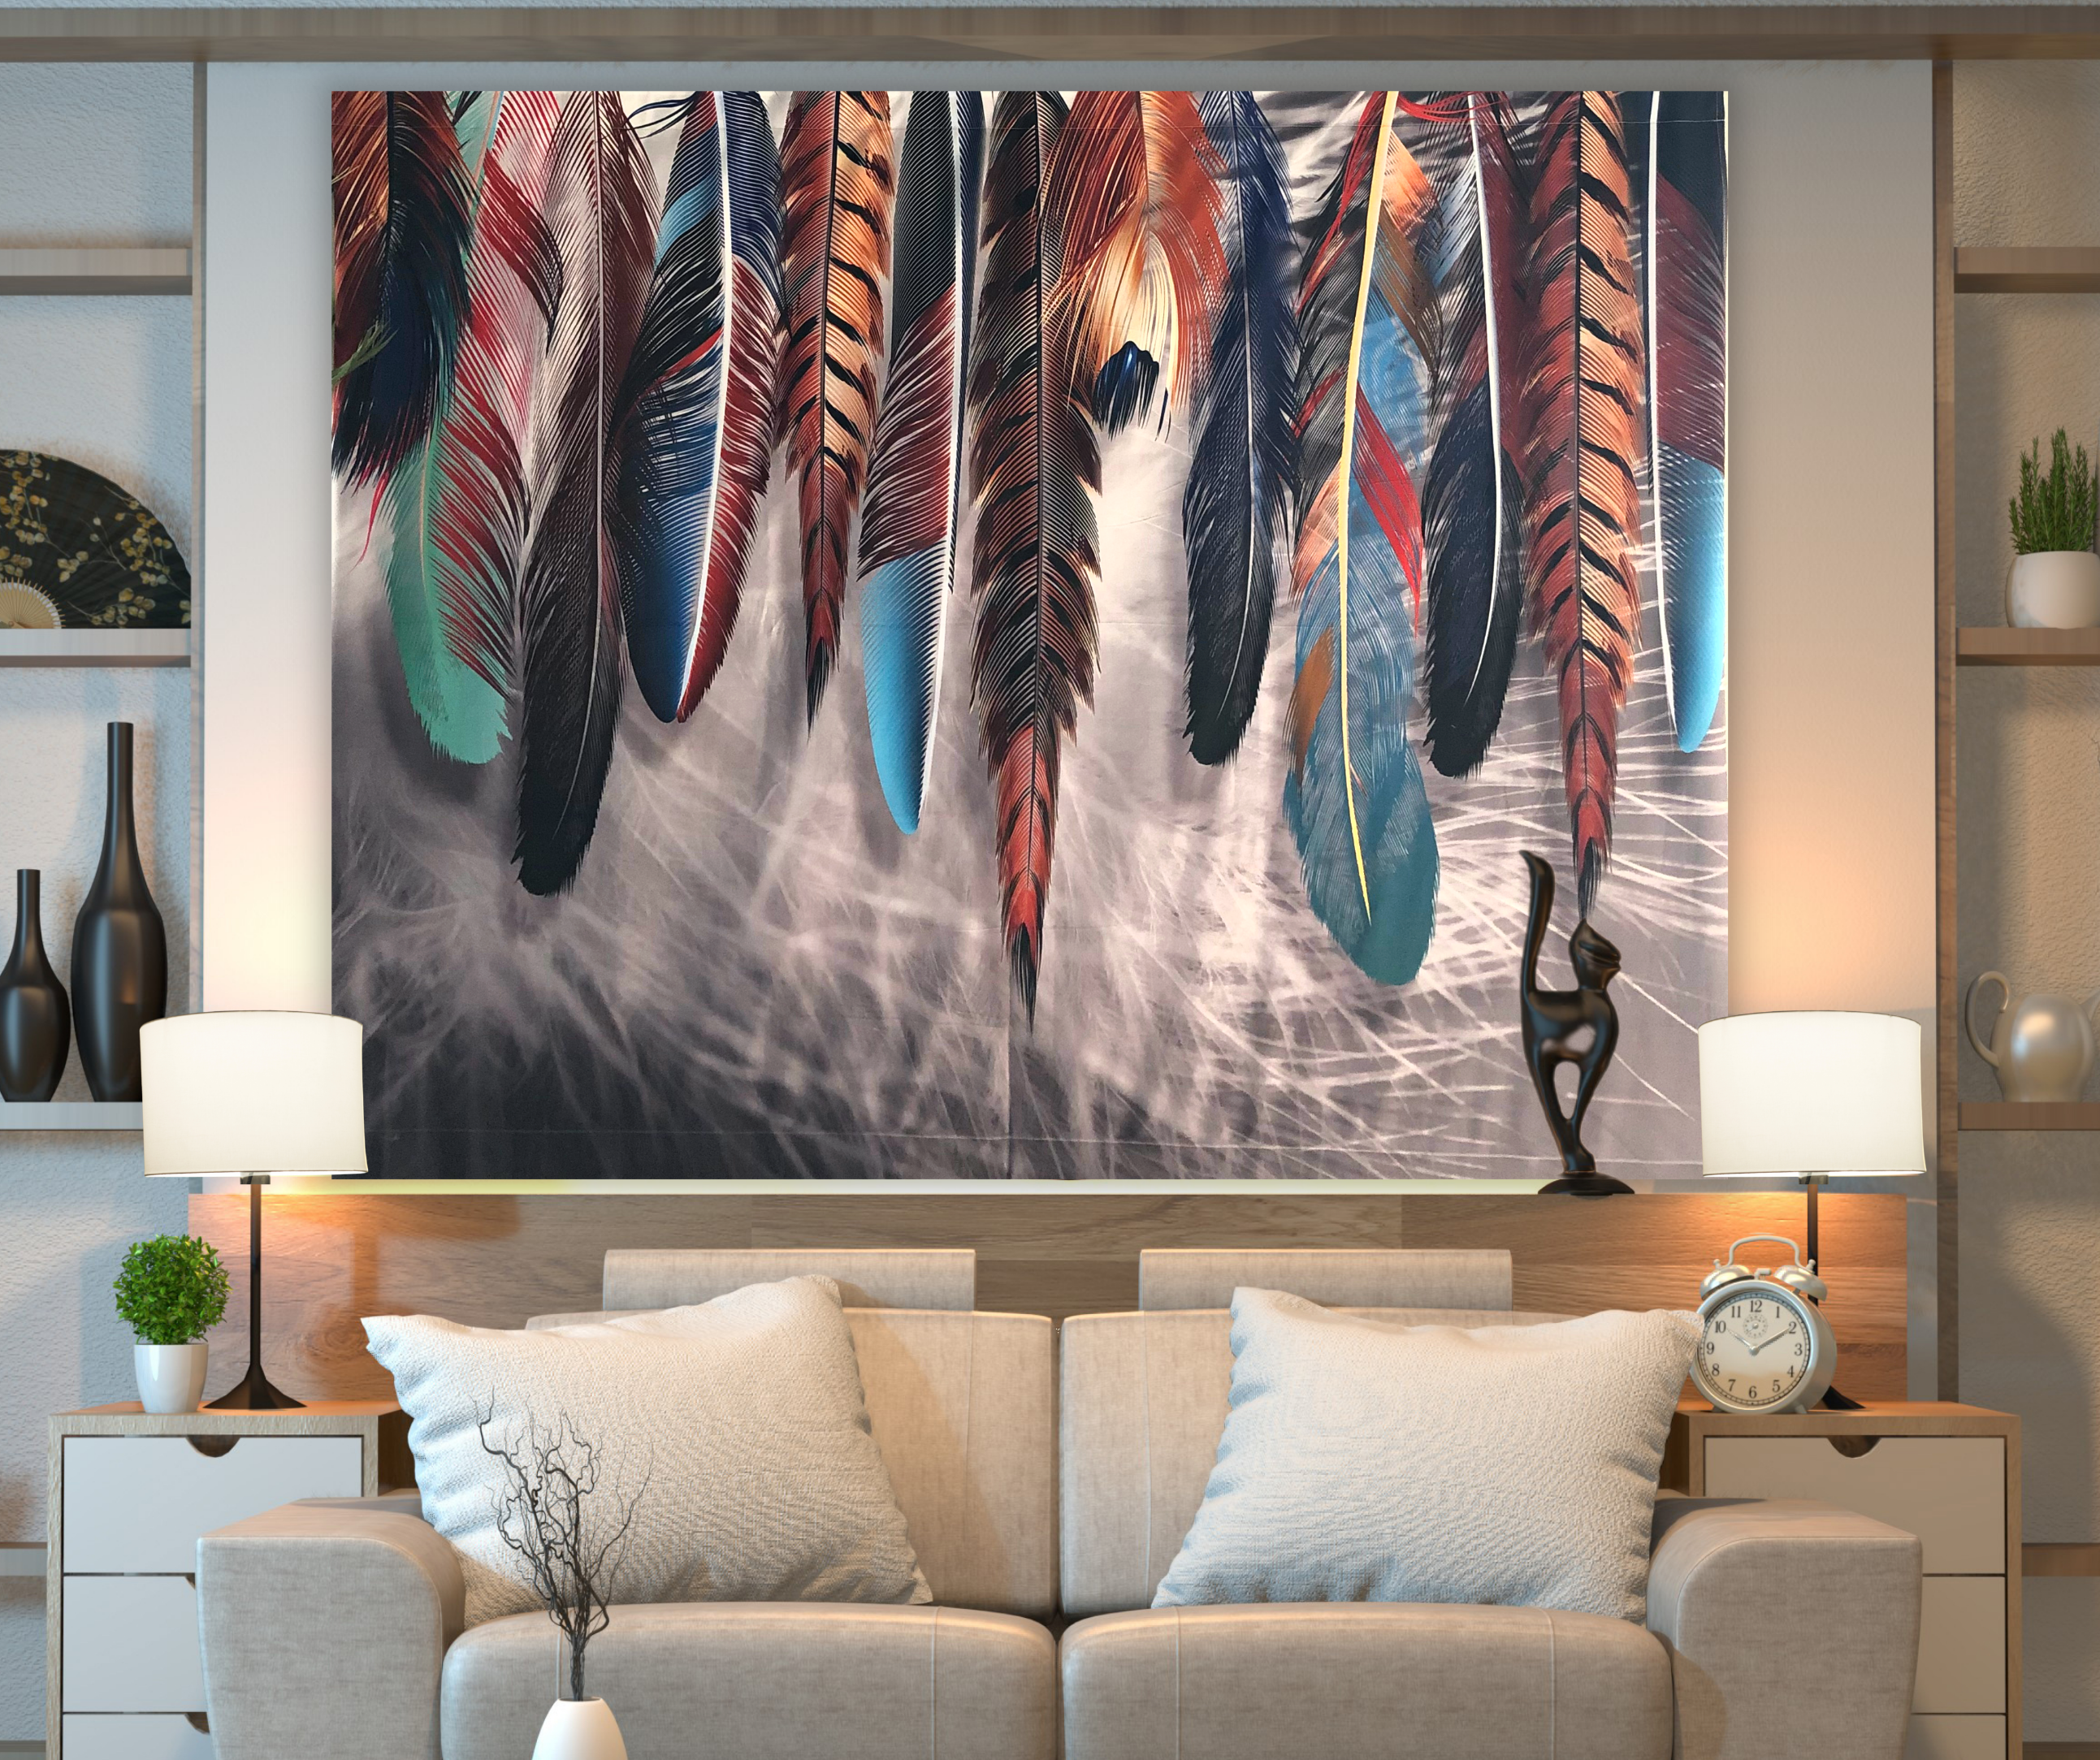 KaiSha LED Tapestry Wall Hanging; Modern Abstract Boho Art Bohemian Dream Catcher